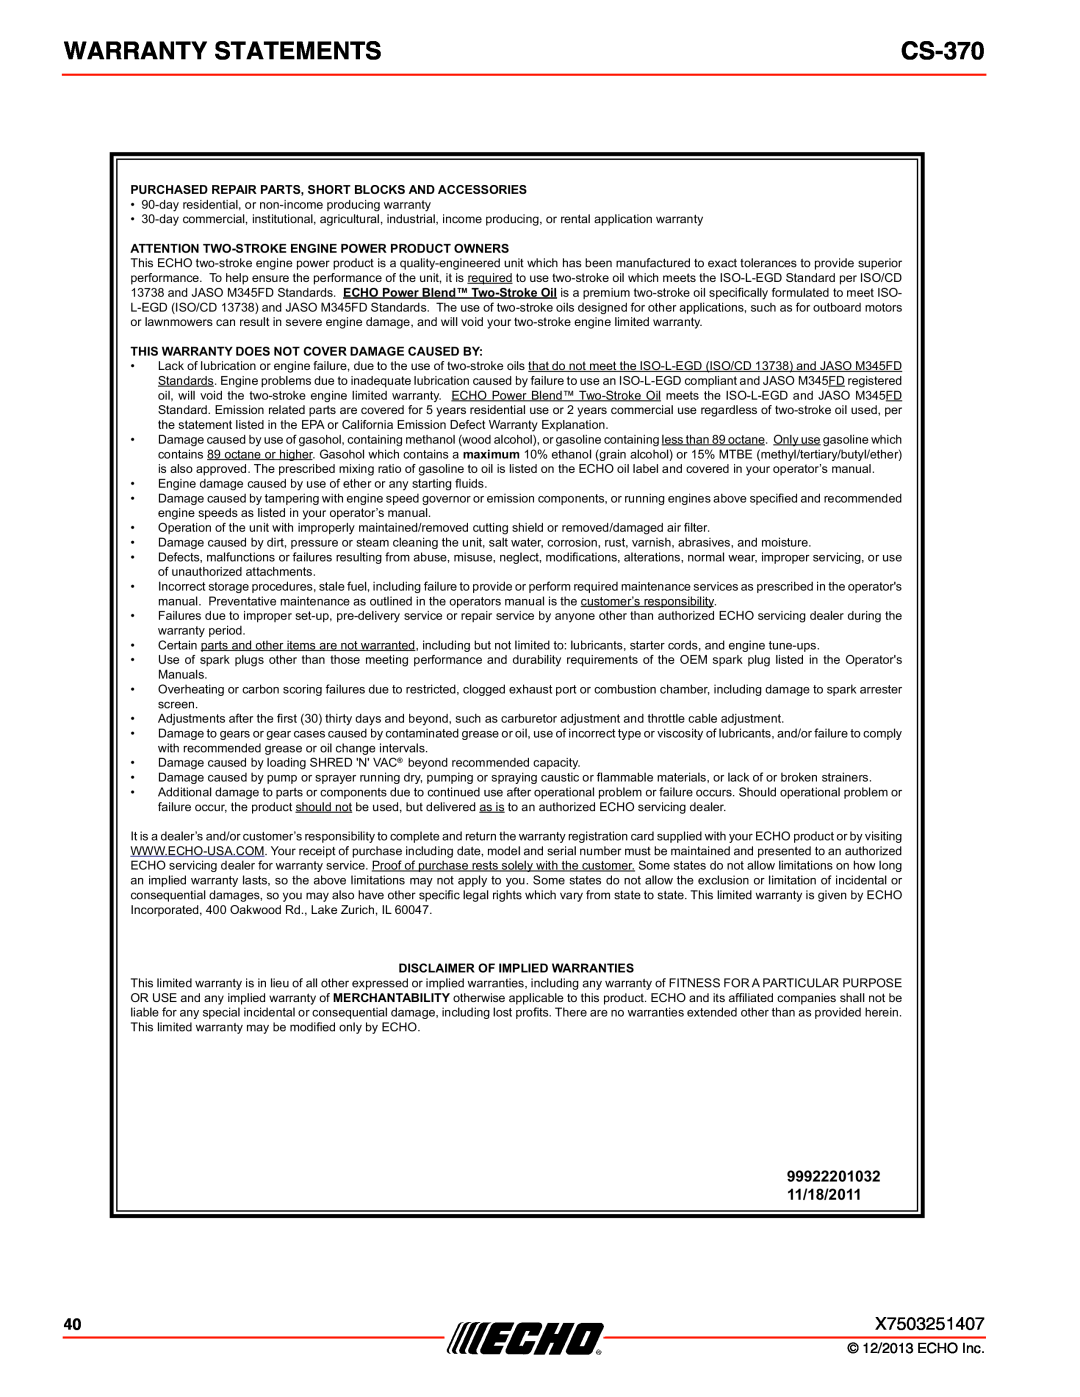 Echo CS-370 instruction manual Warranty Statements, 99922201032 11/18/2011 